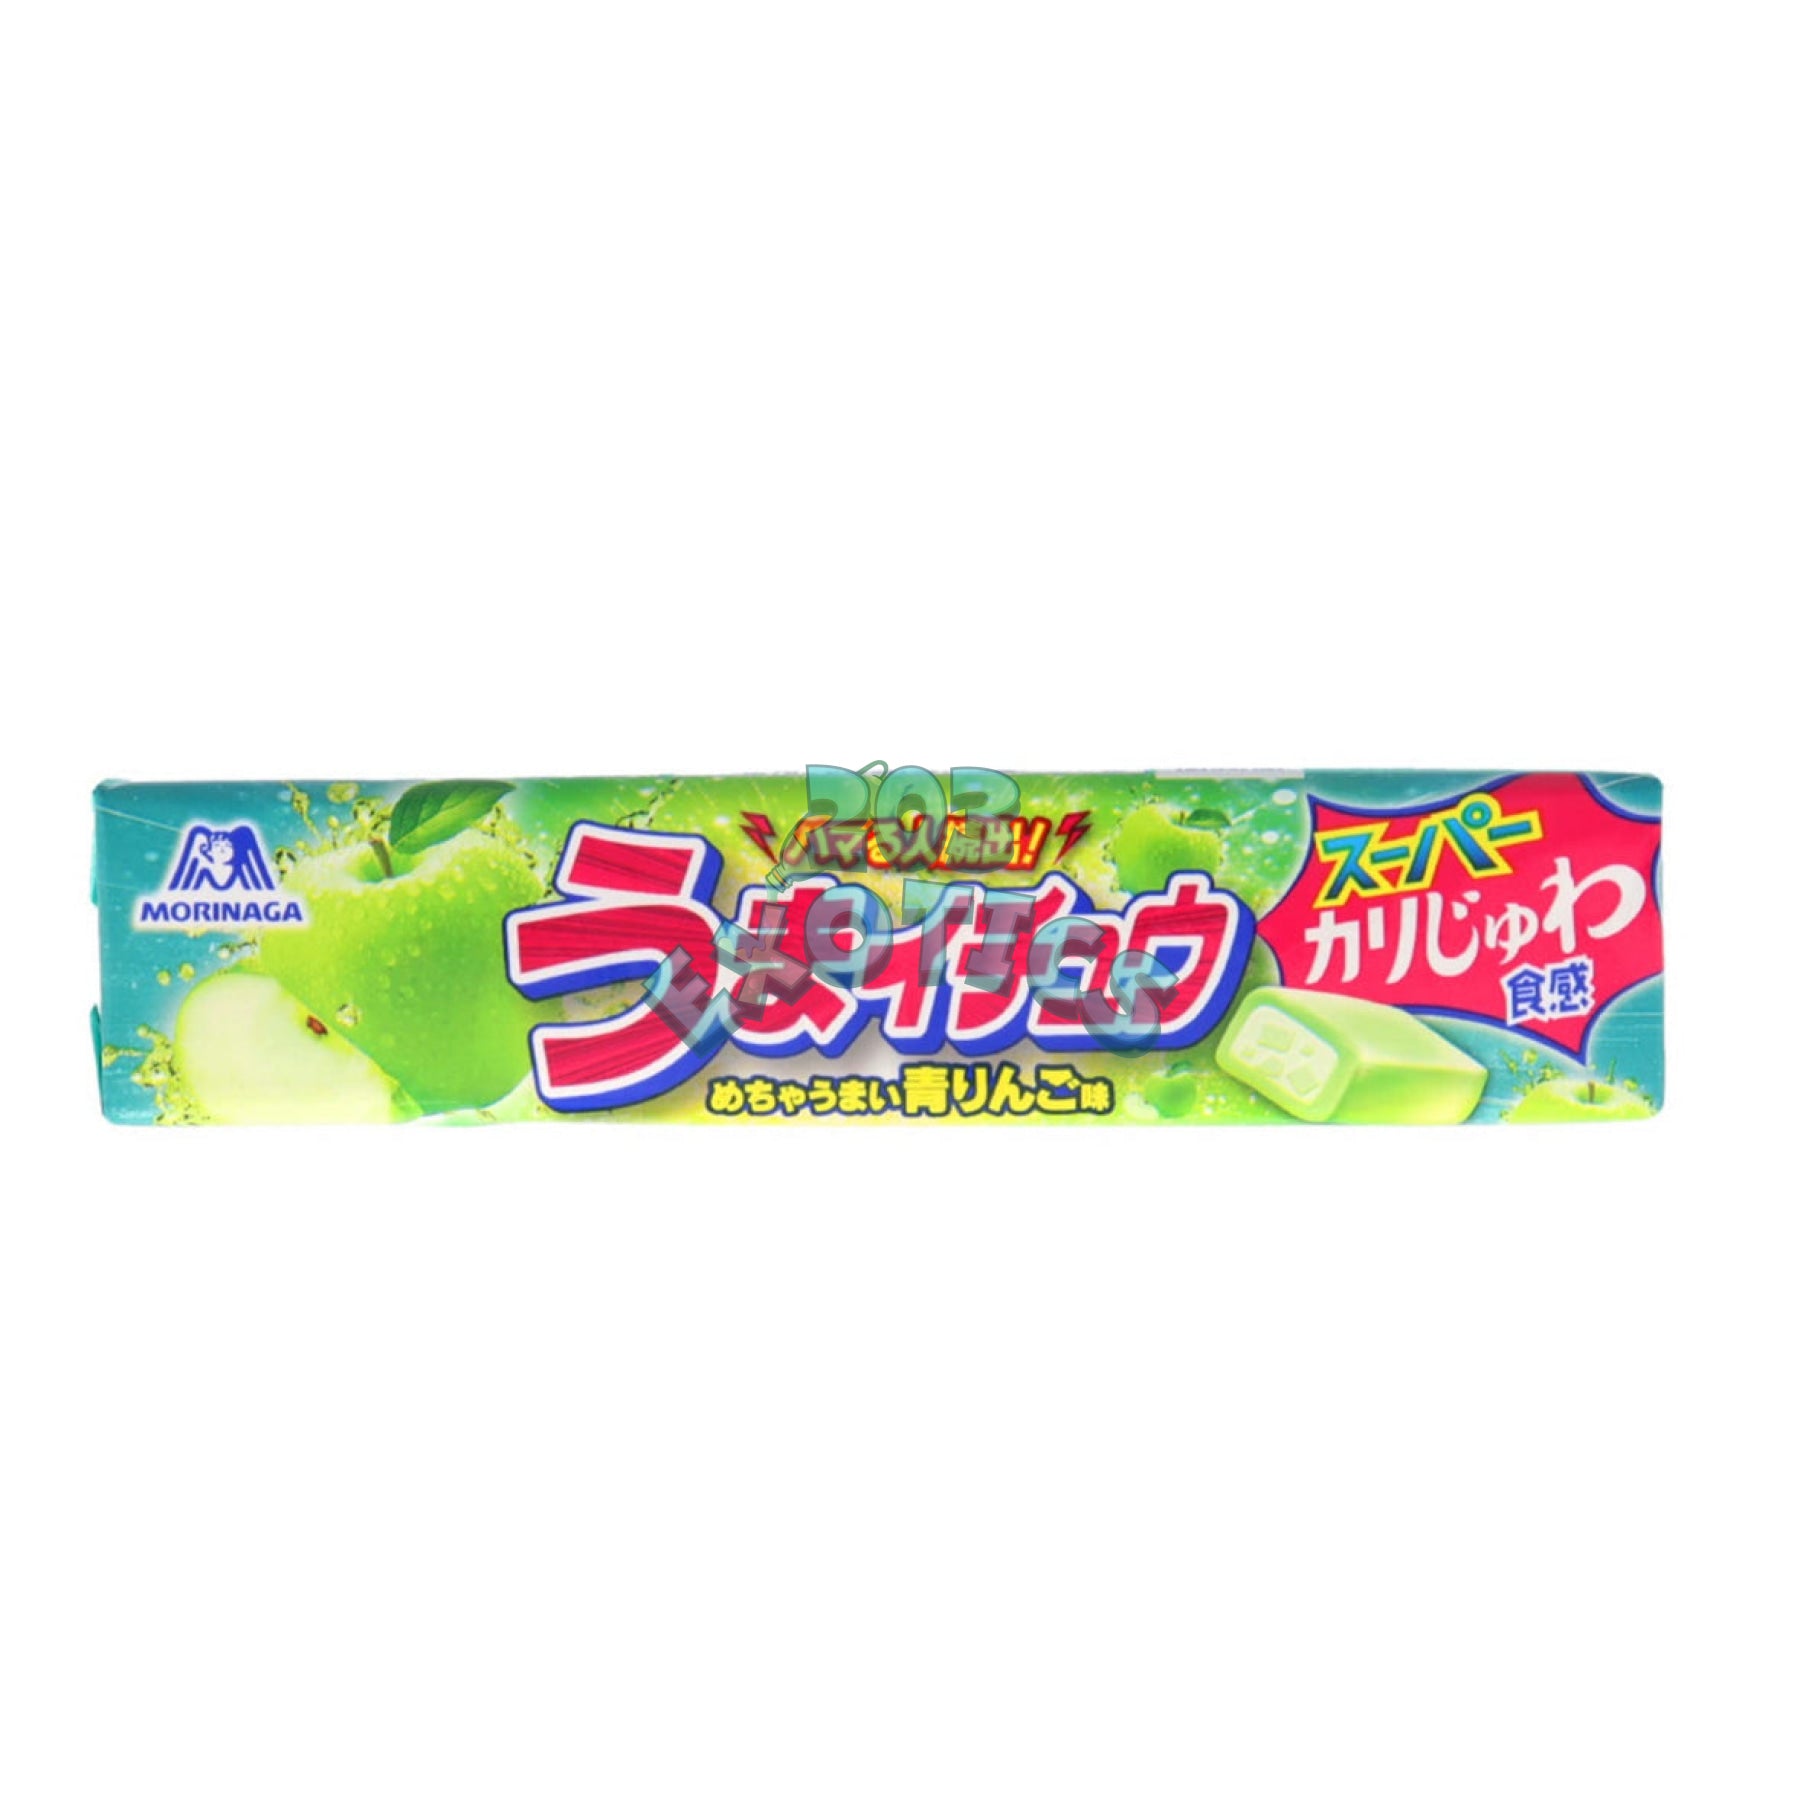 Hi-Chew Apple (Japanese Version) (12Ct) Candy